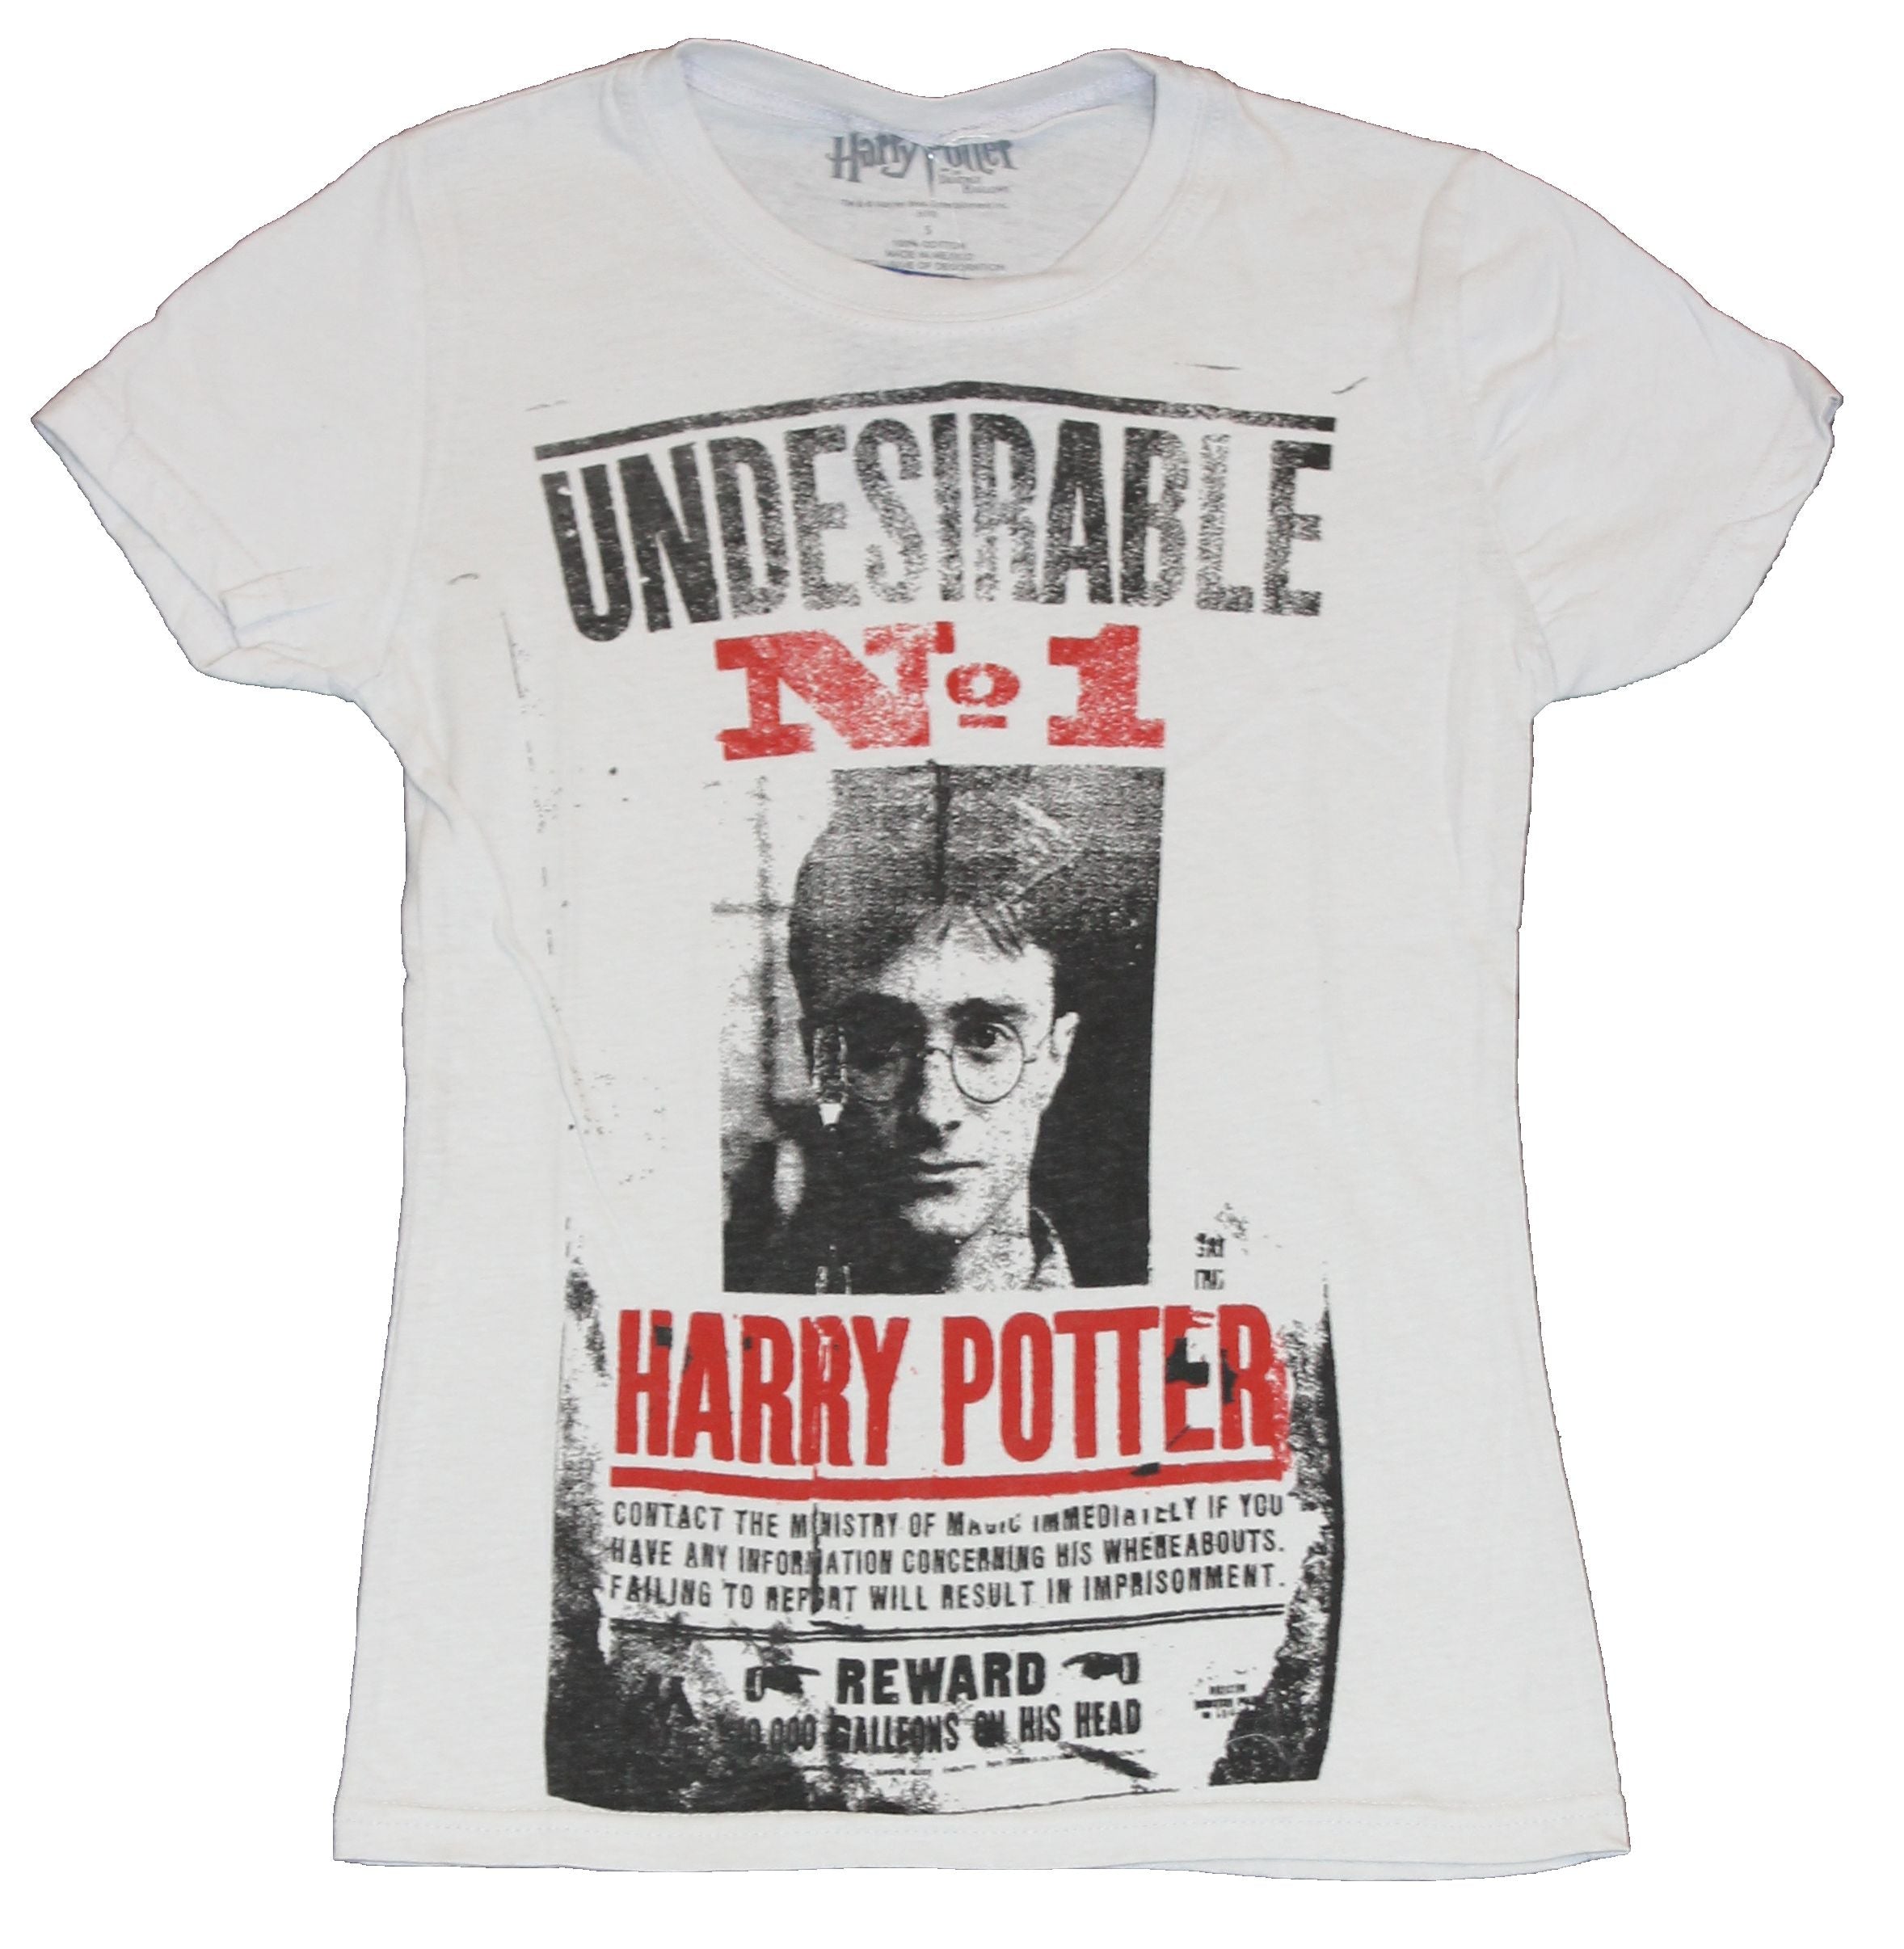 Harry Potter Girls Juniors T-Shirt - Distressed Undesirable No. 1 Handbill Image